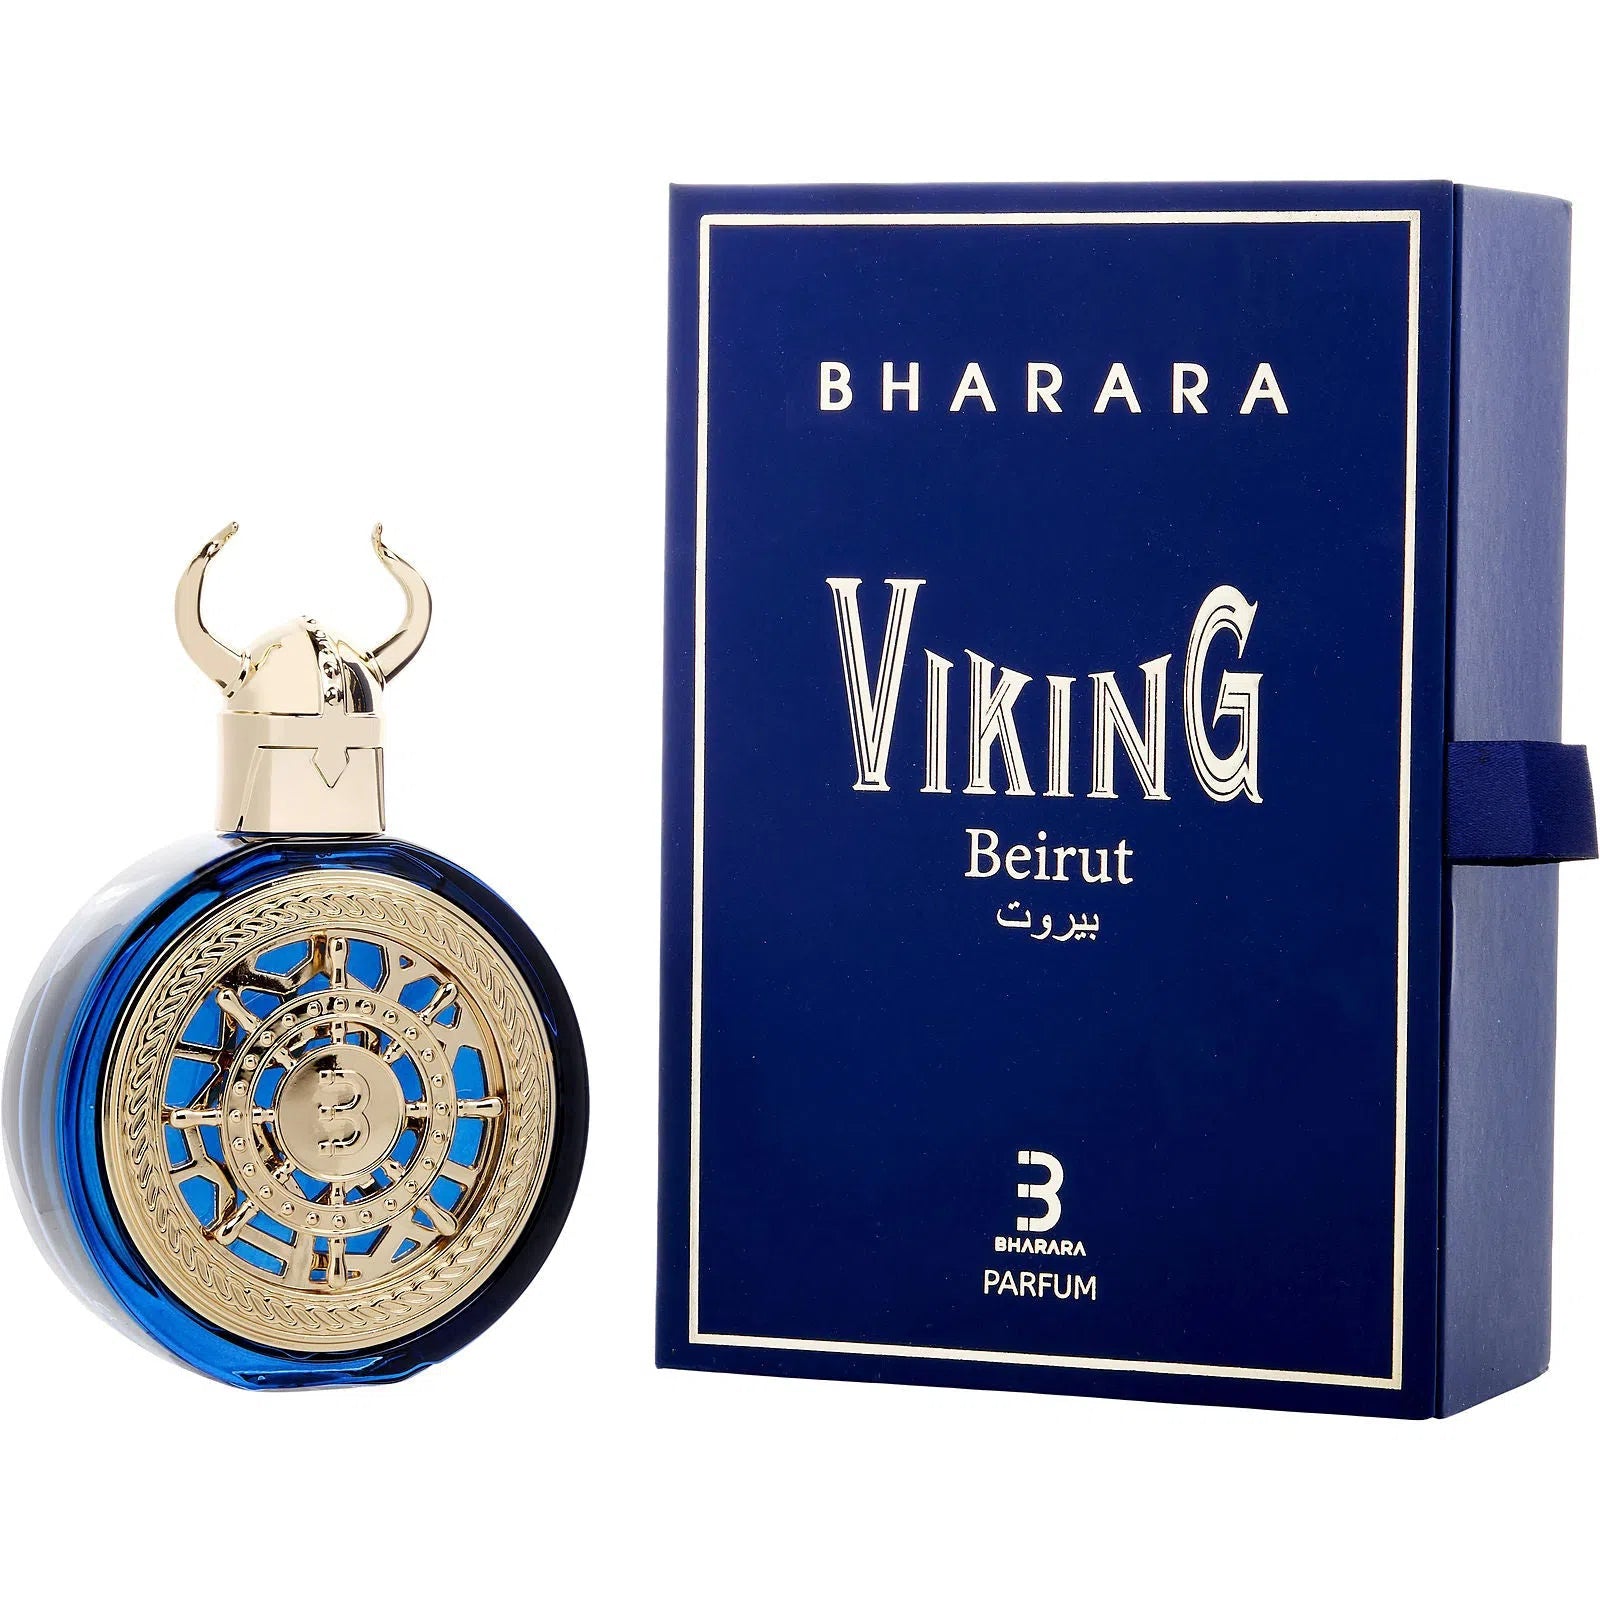 Perfume Bharara Viking Beirut Parfum (U) / 100 ml - 850050062028- Prive Perfumes Honduras